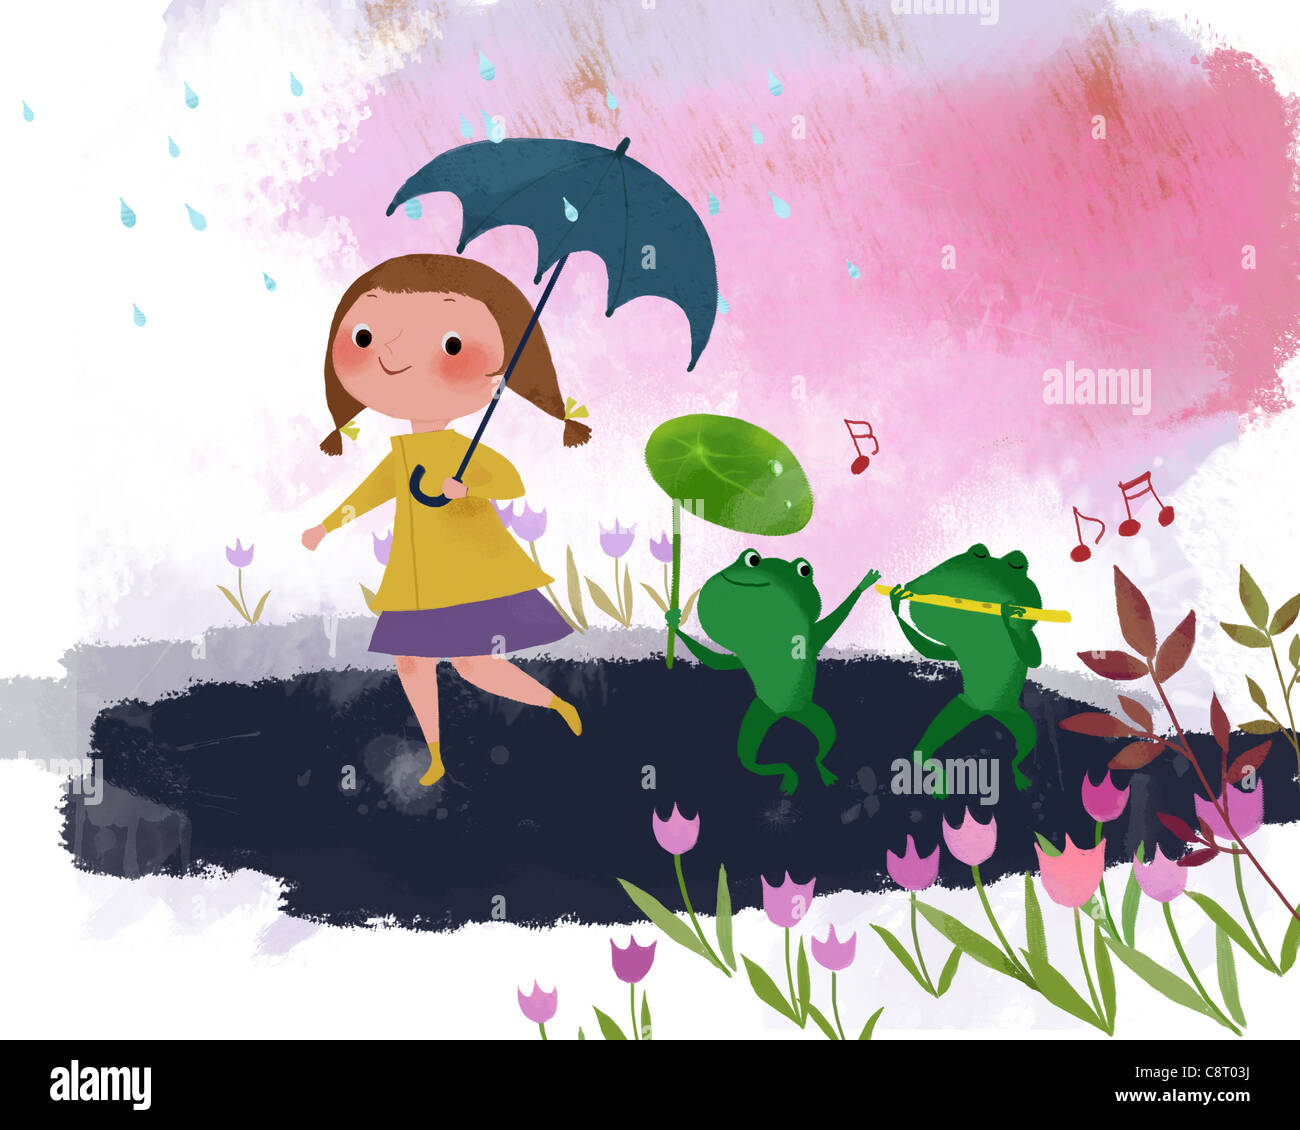 Girl Holding Umbrella Walking With Froggies On Rainy Day Stock Photo